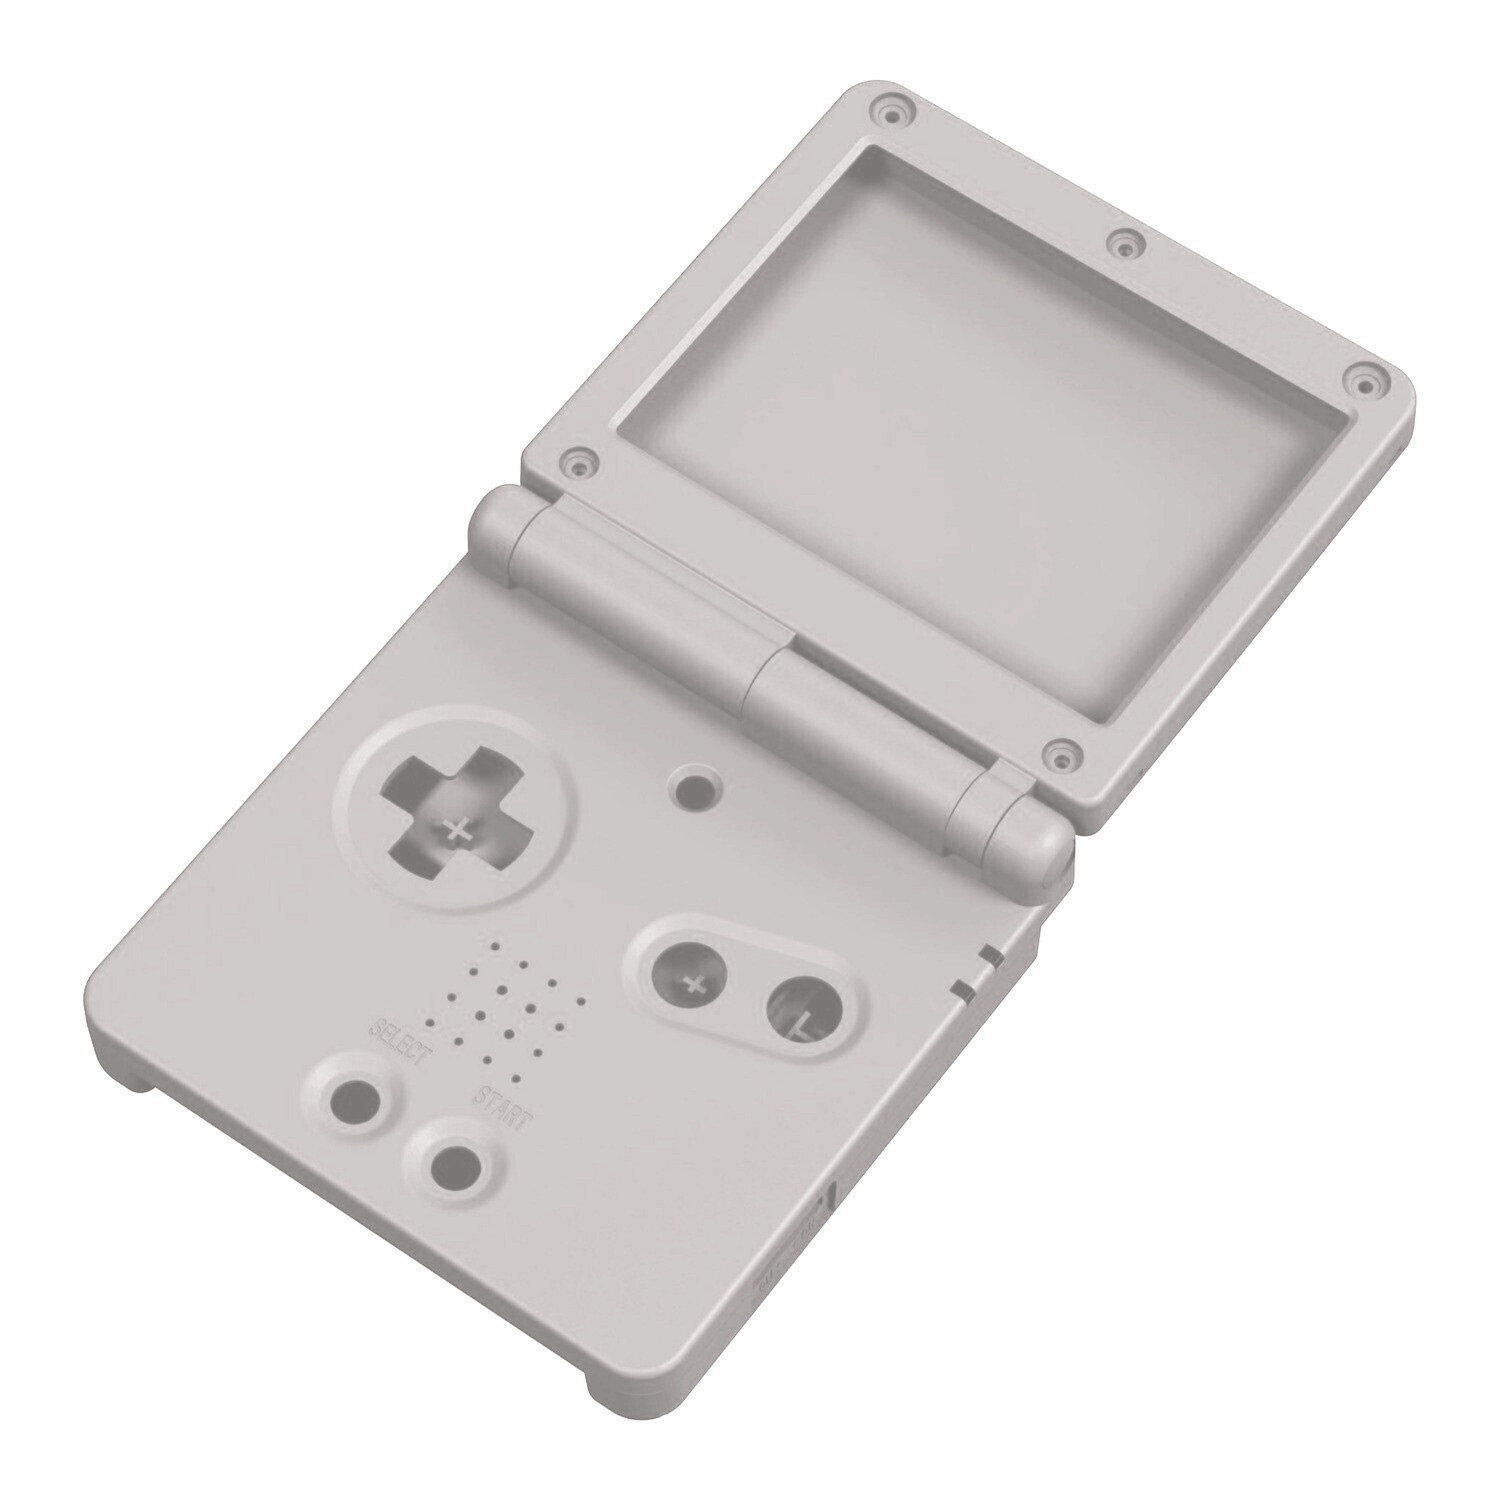 Game Boy Advance SP Shell (Grey)